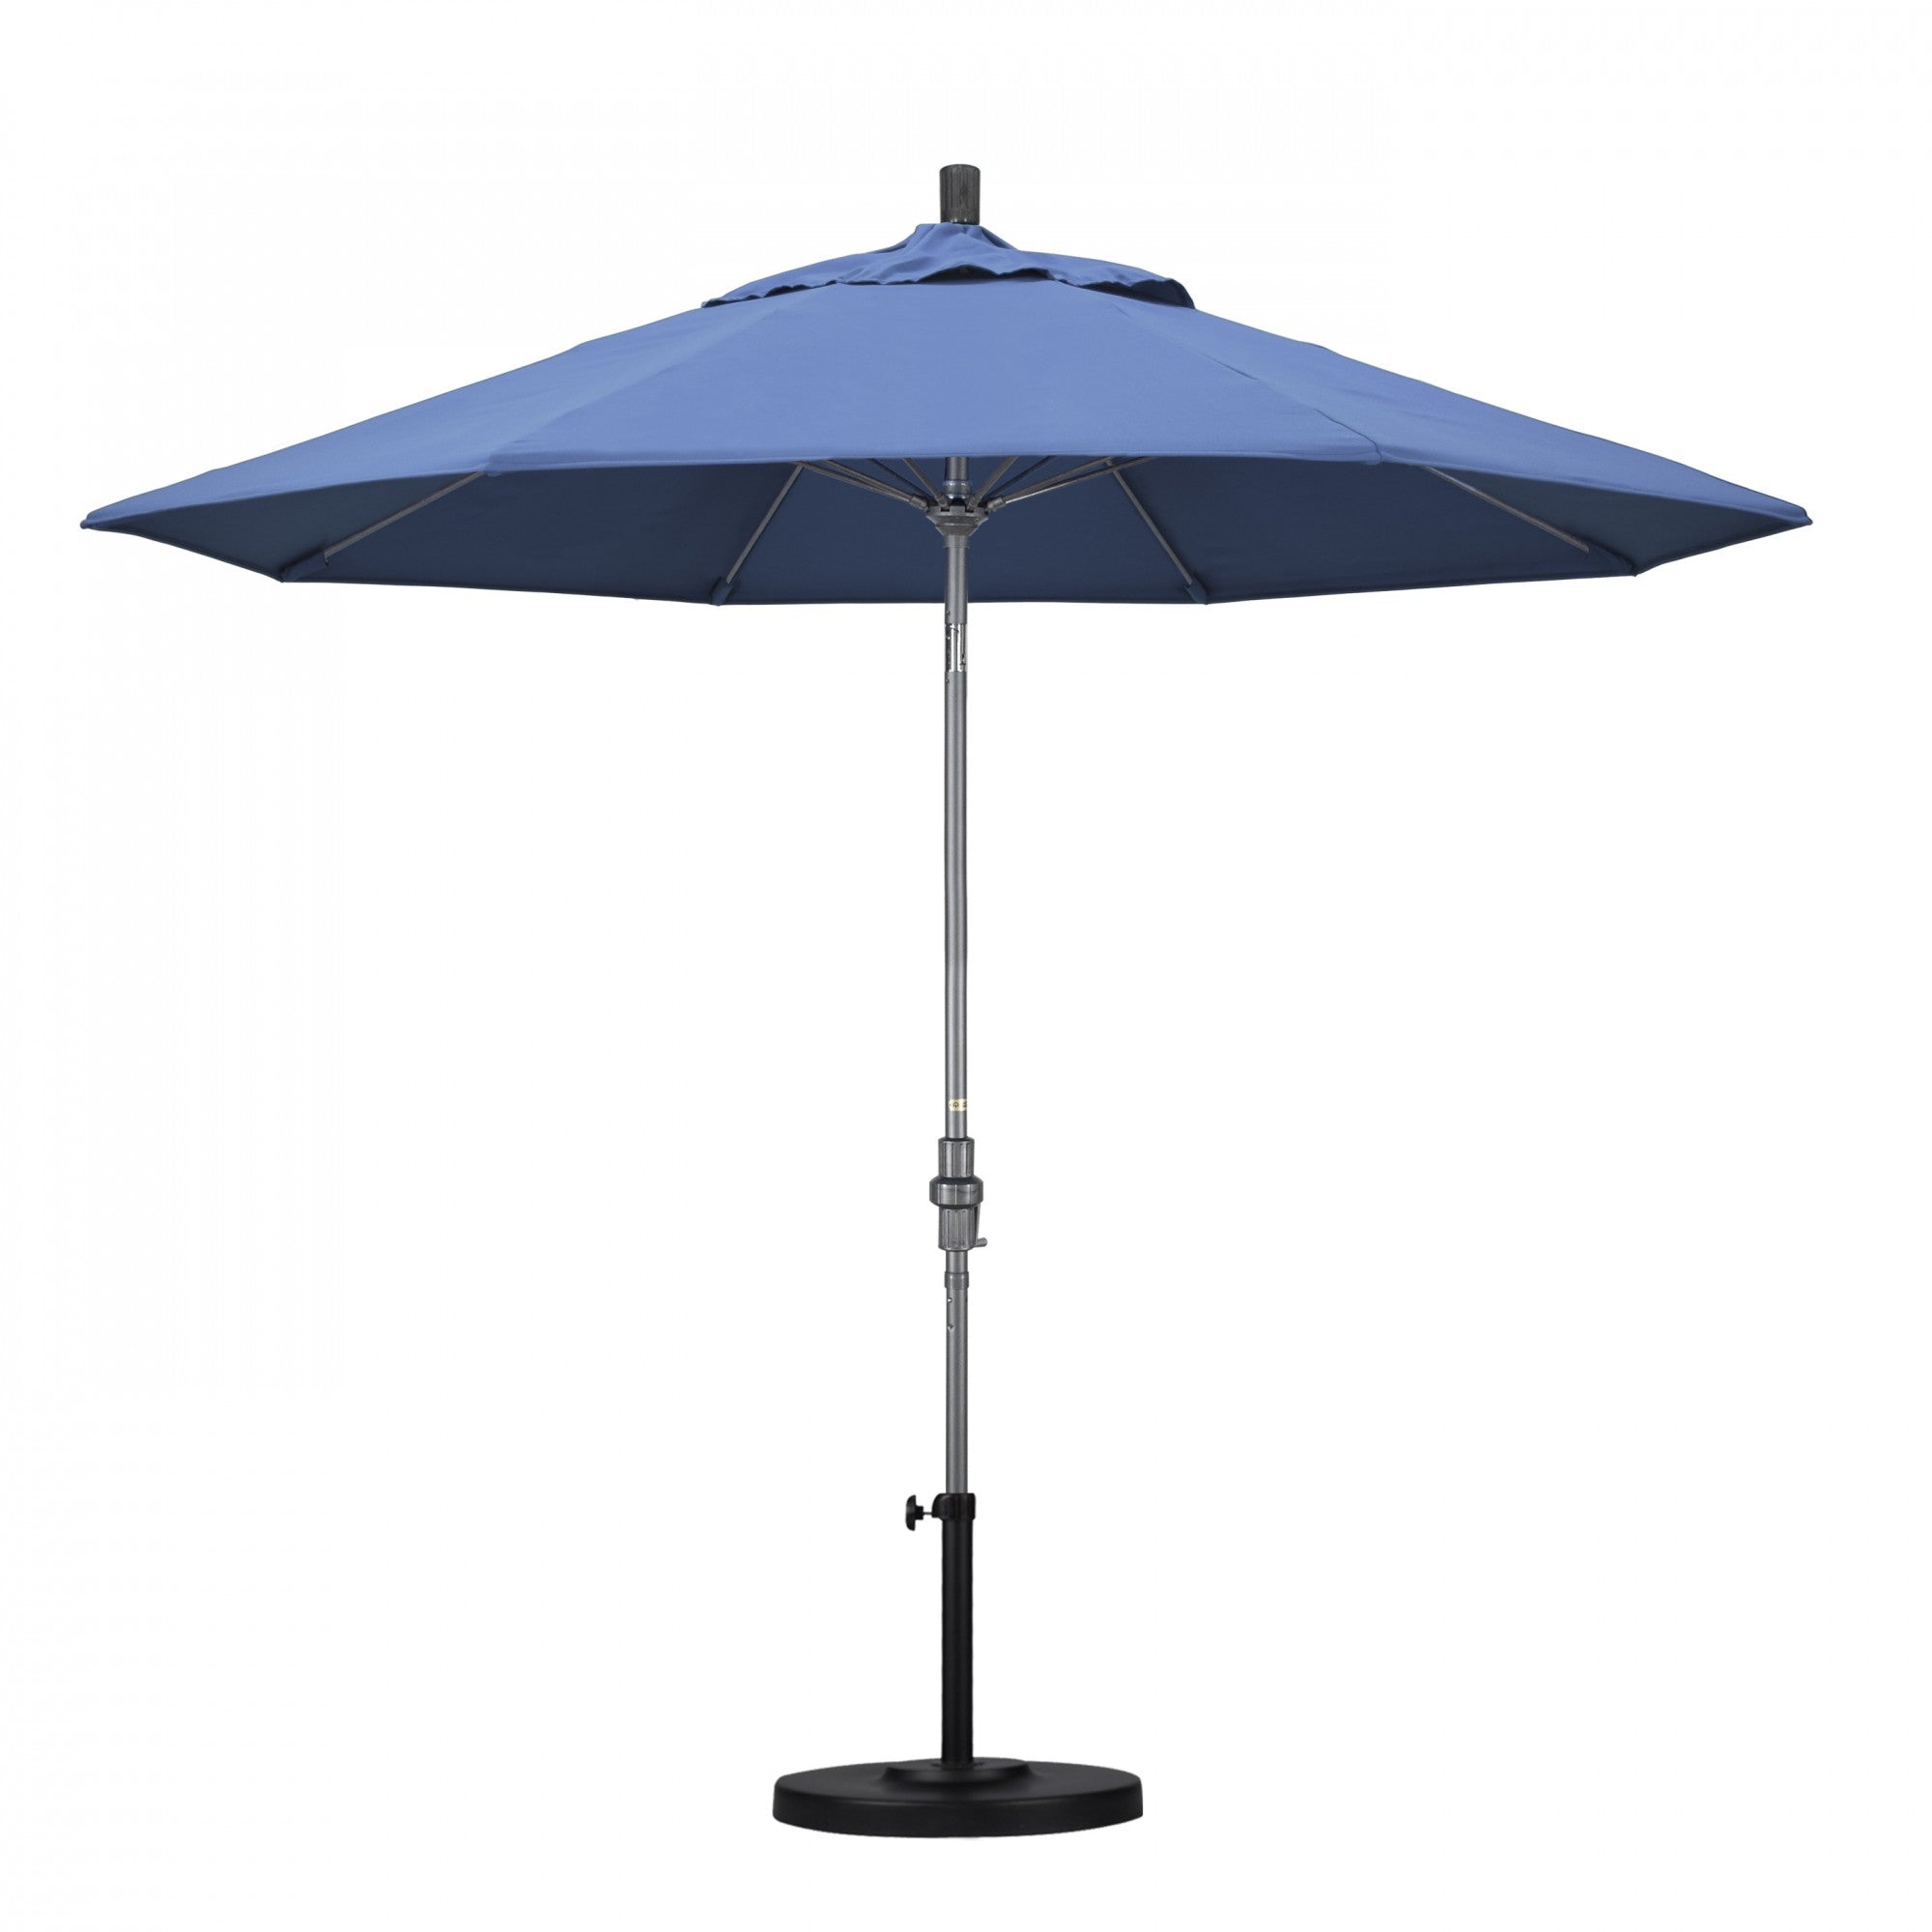 California Umbrella - 9' - Patio Umbrella Umbrella - Aluminum Pole - Frost Blue - Olefin - GSCUF908010-F26